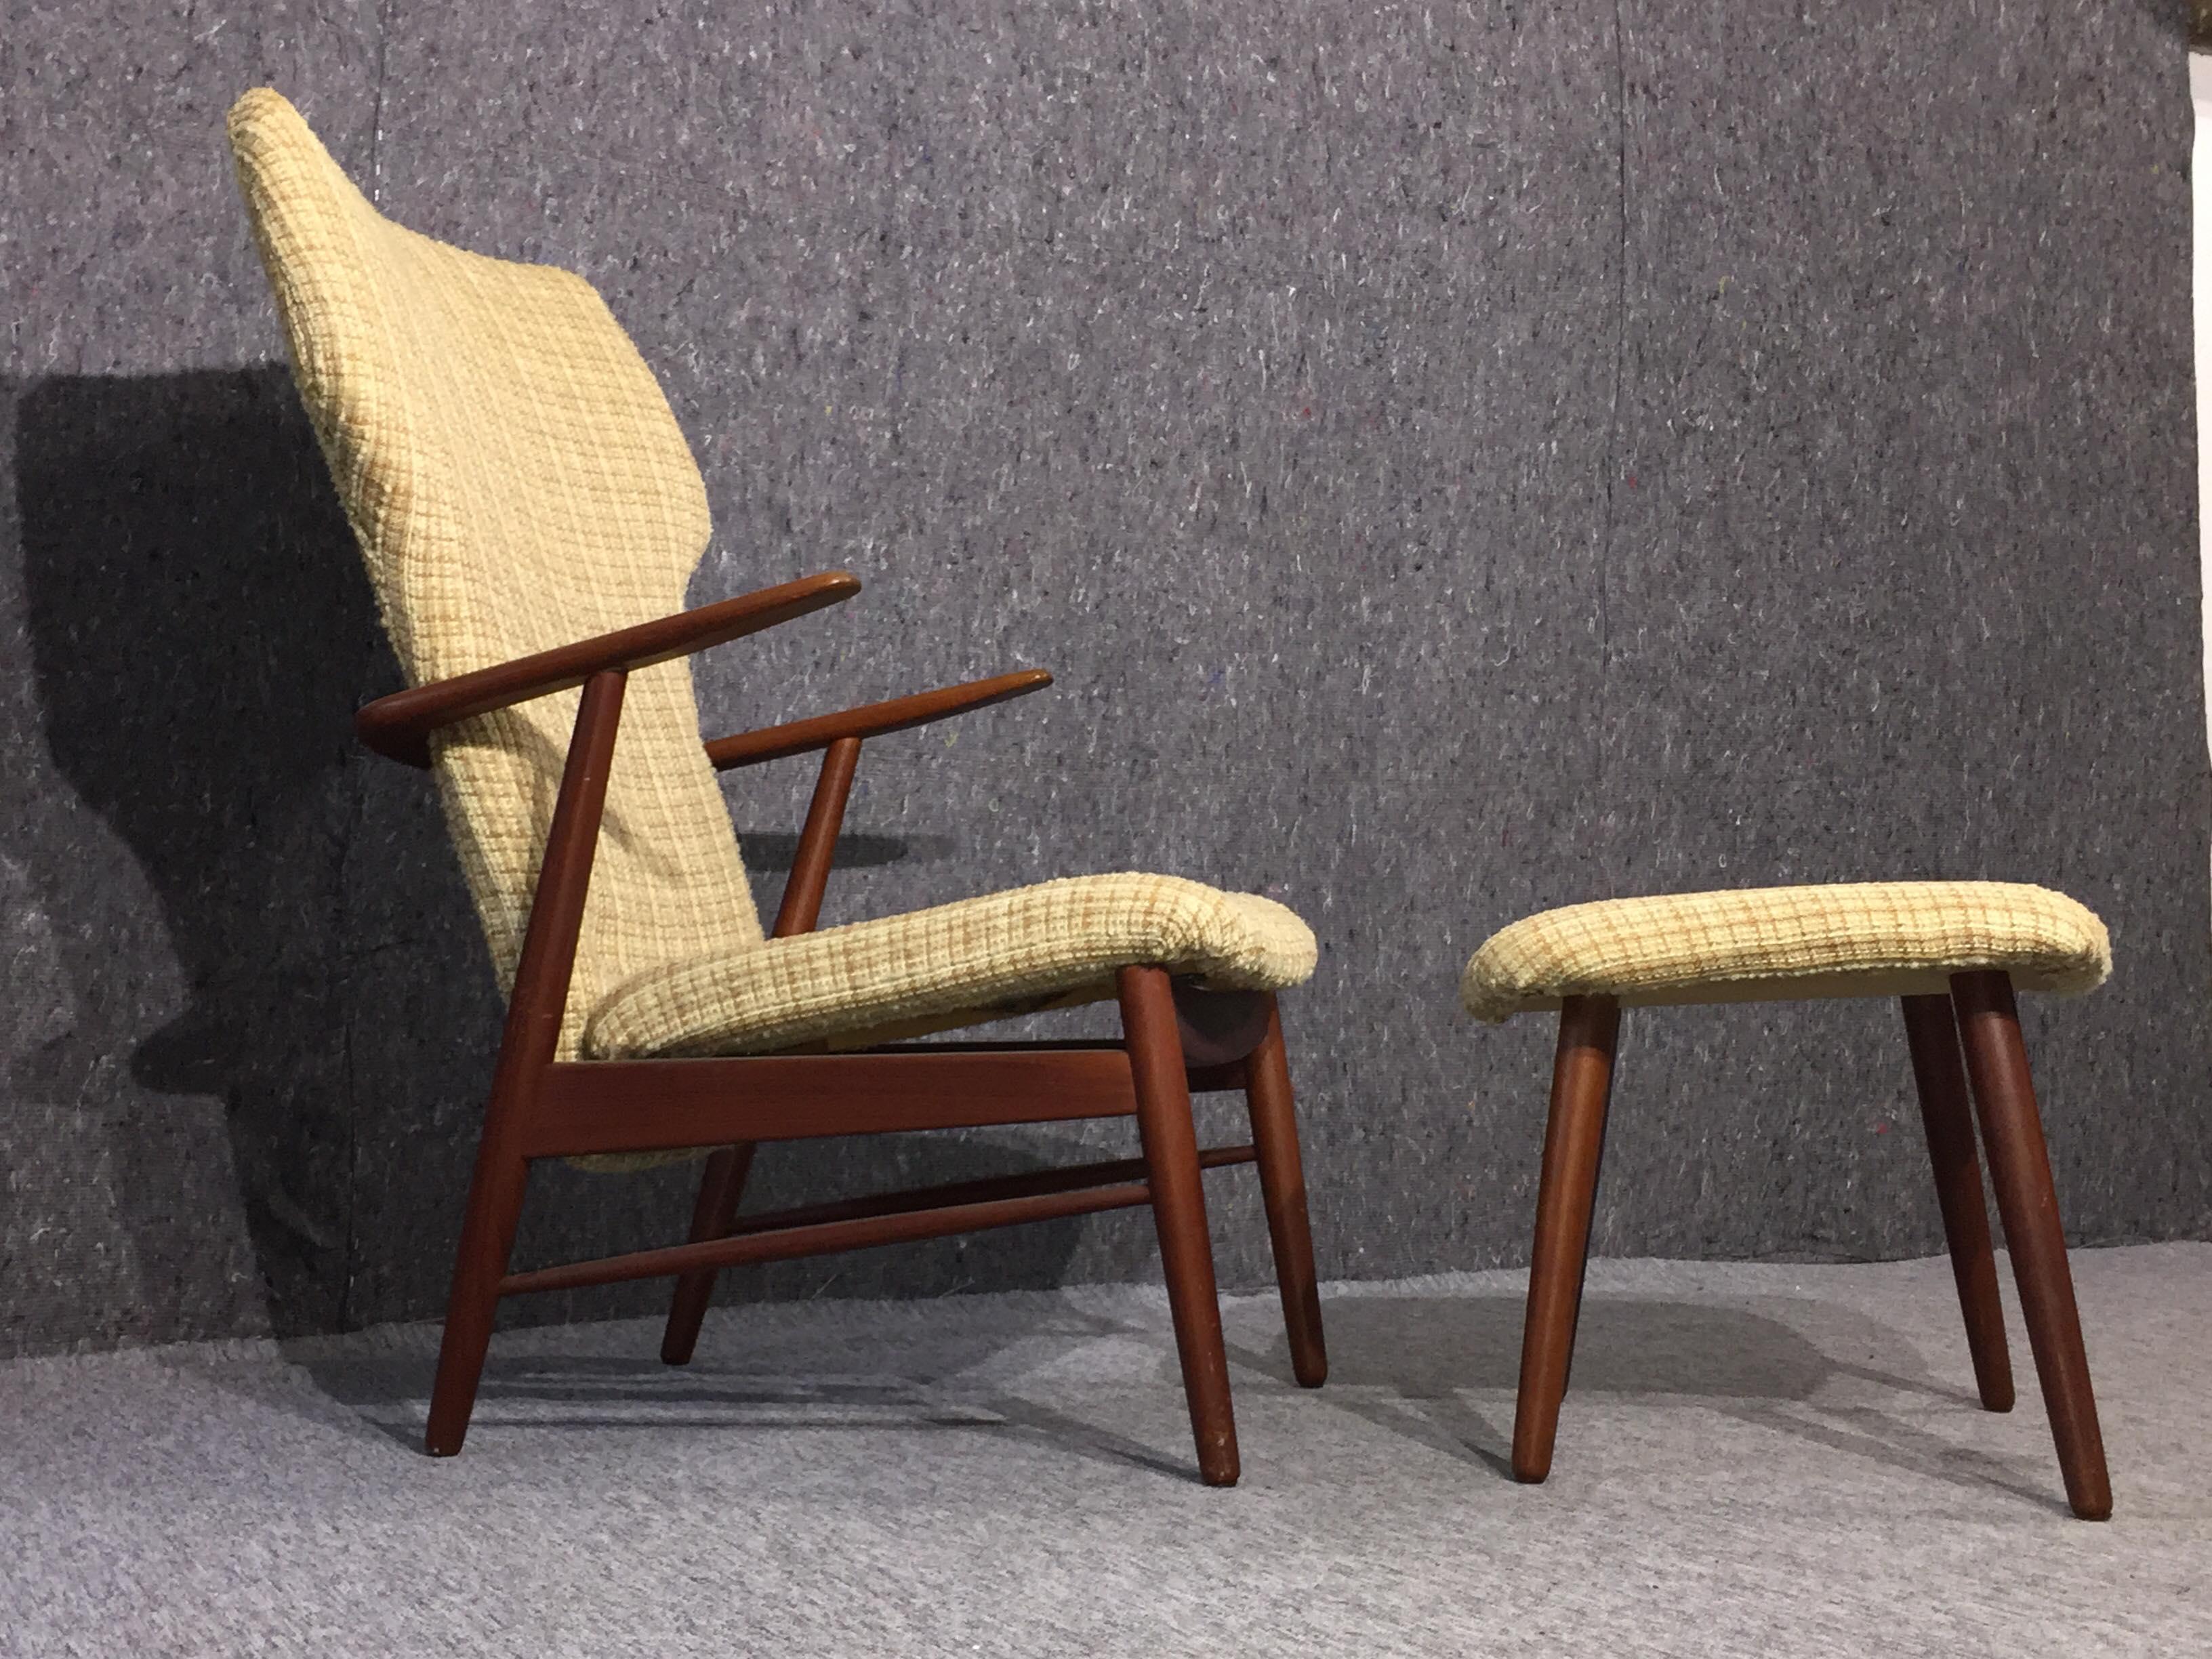 crochet chair prototype